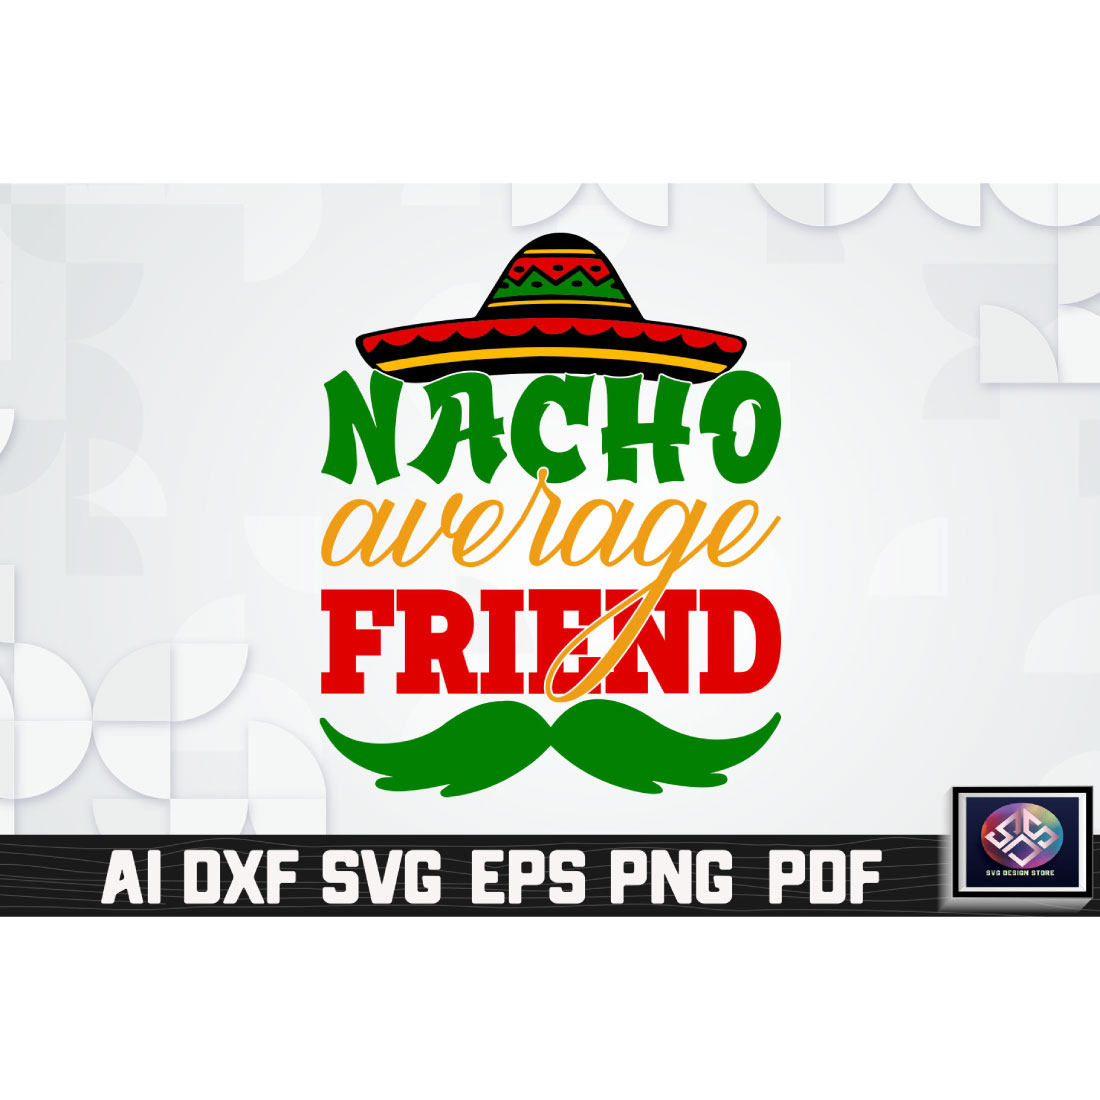 Nacho Average Friend cover image.